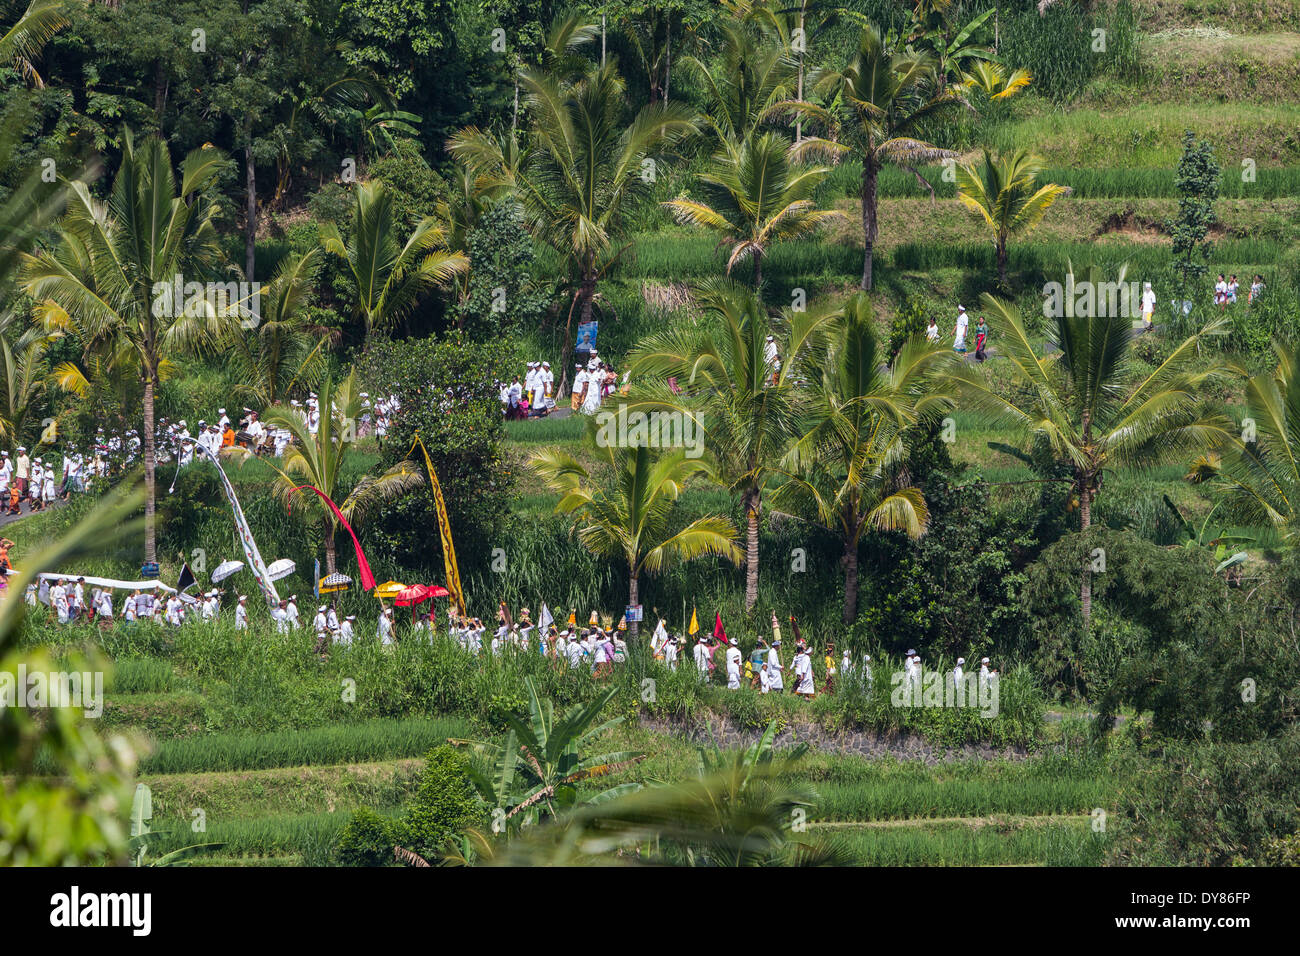 Die Prozession durch das Dorf Tegalalang, Bali Stockfoto